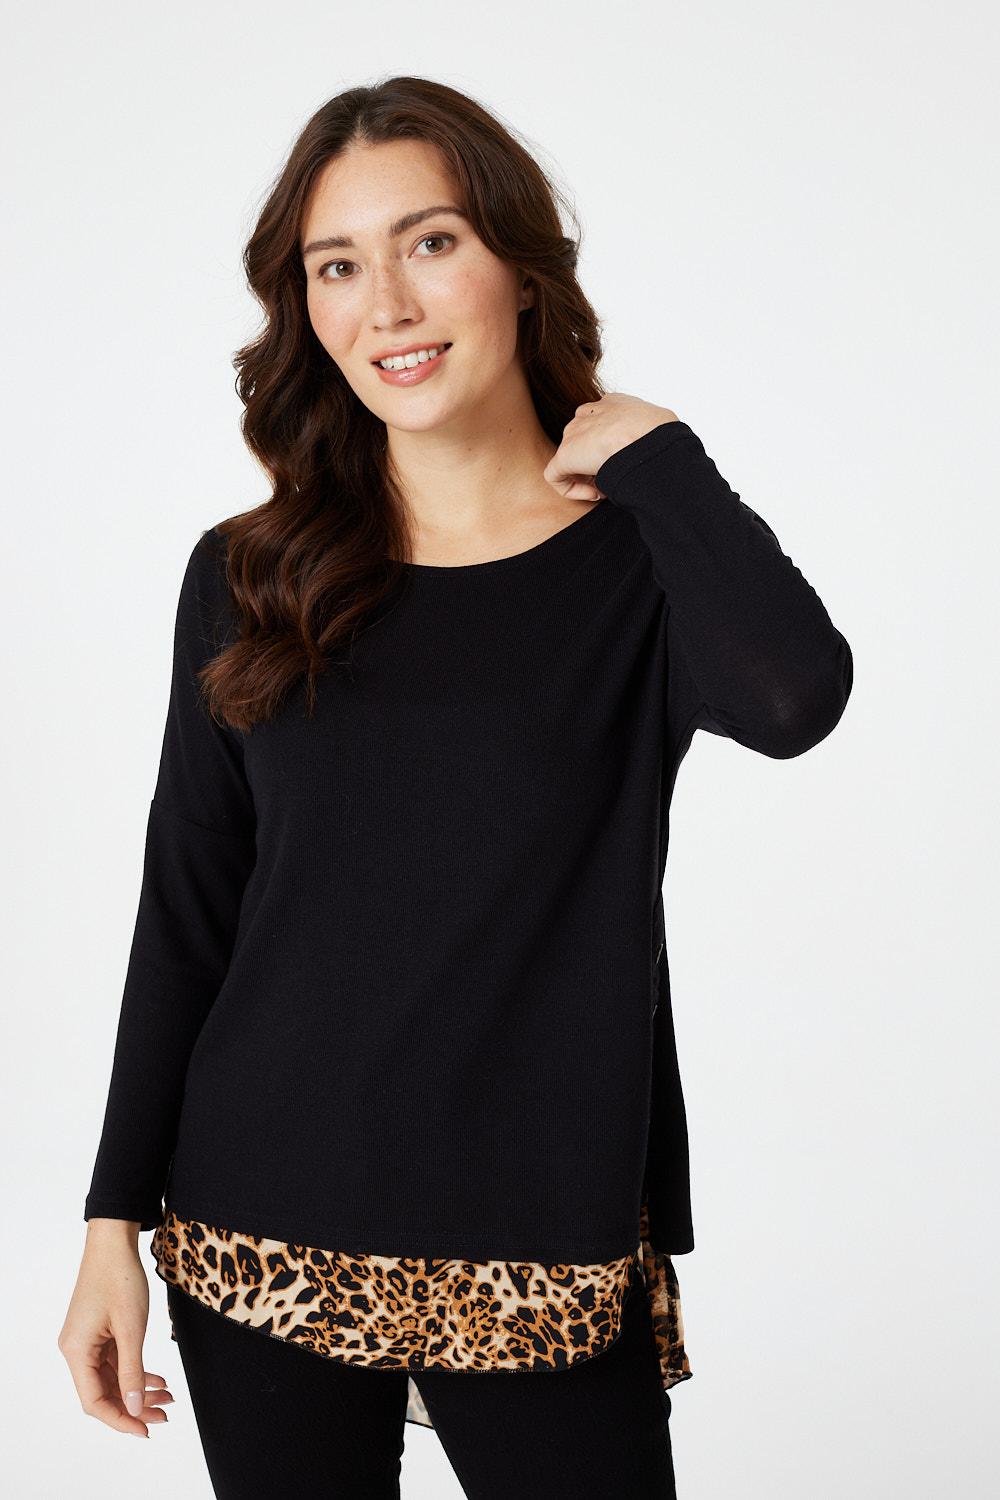 Black | Animal Print Long Sleeve T-Shirt : Model is 5'8.5"/174 cm and wears UK8/EU36/US4/AUS8